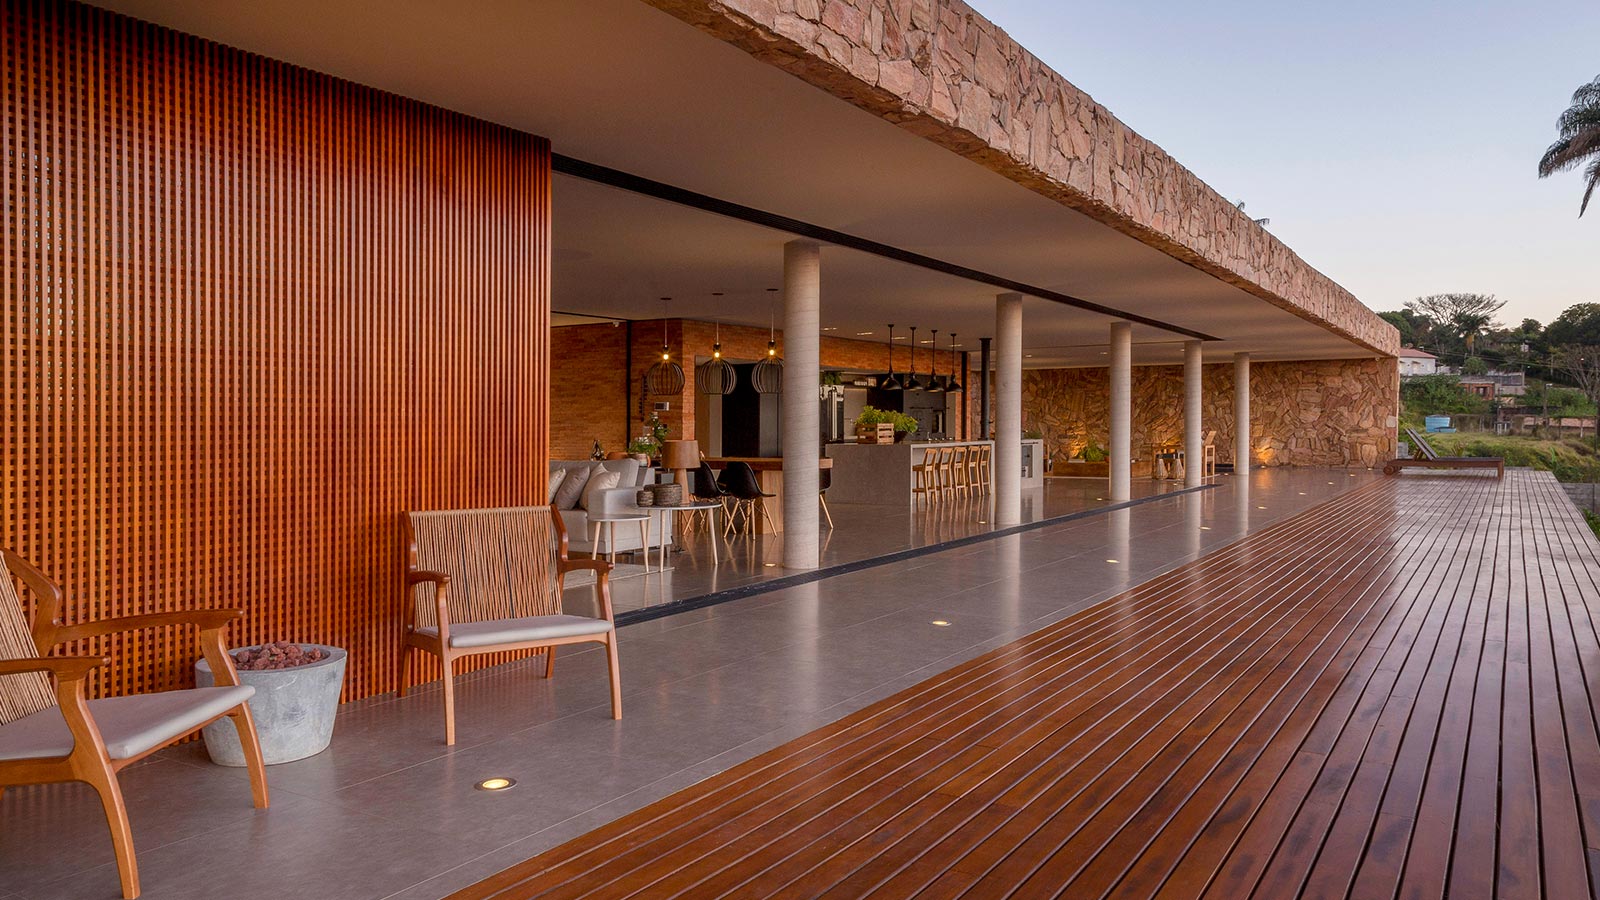 Casa Das Pedras by mf+arquitetos in Brazil